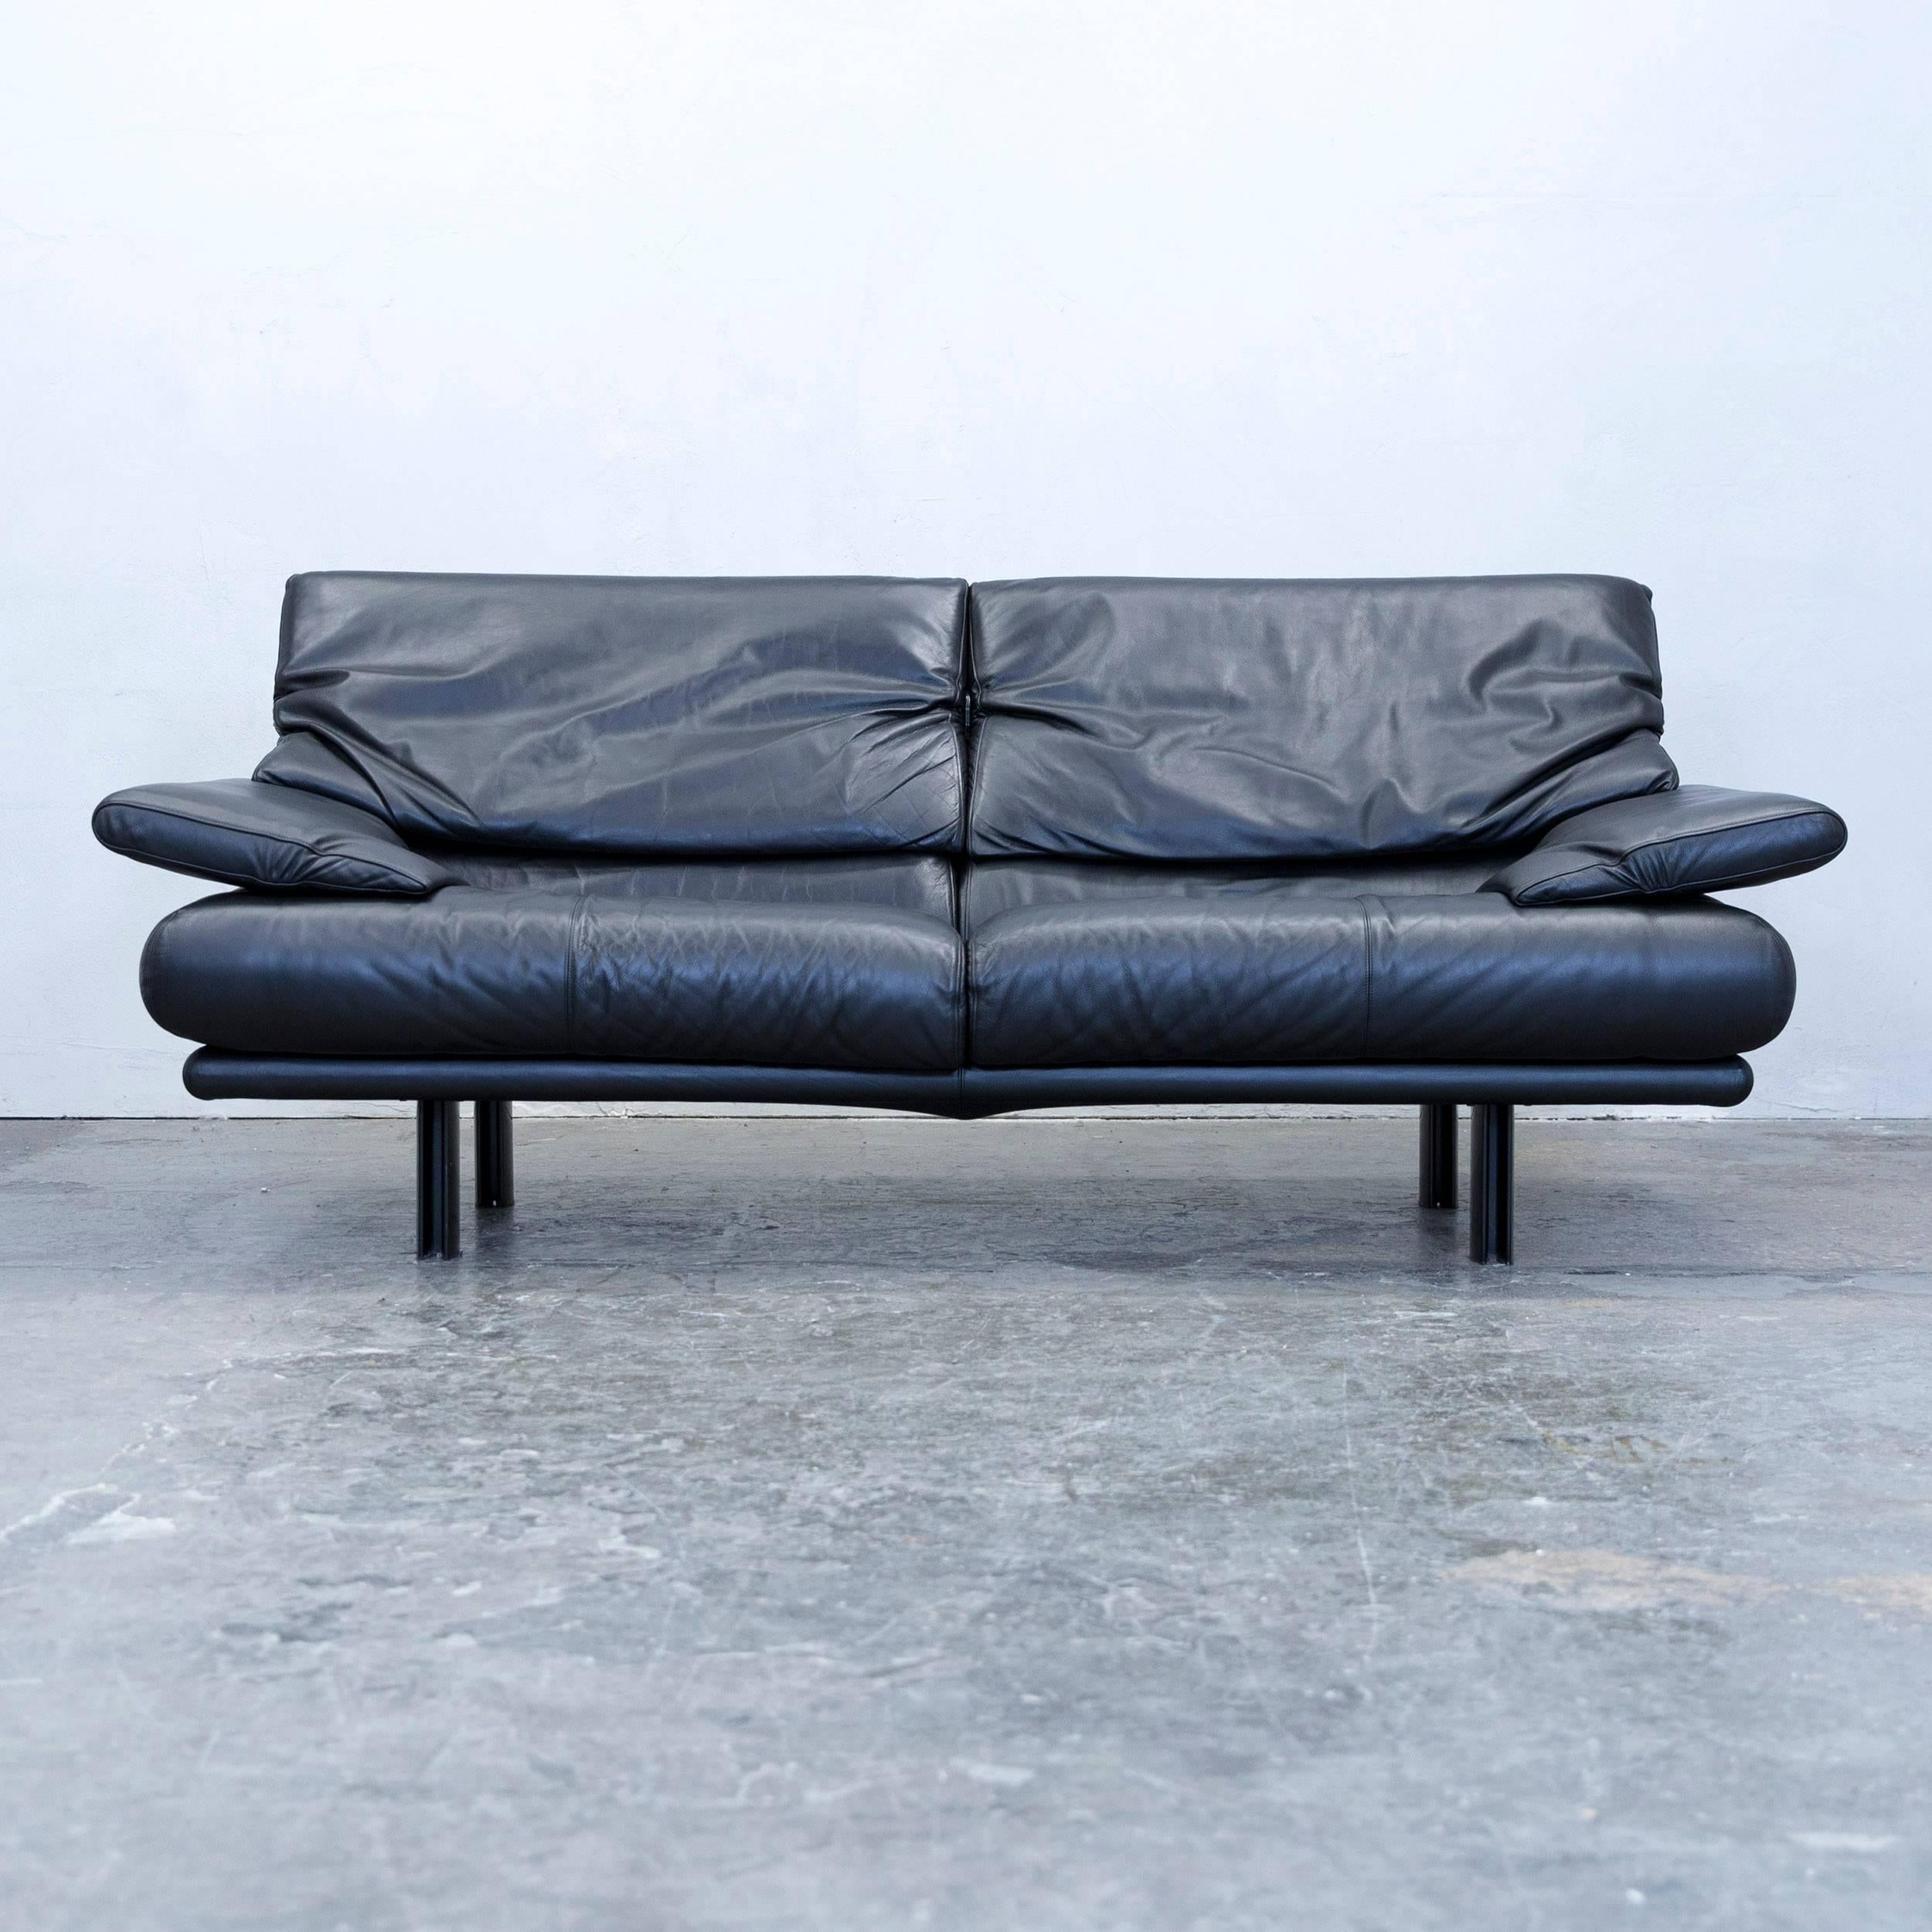 Italian B&B Italia Alanda Designer Sofa Leather Black Two-Seat Function Couch Modern